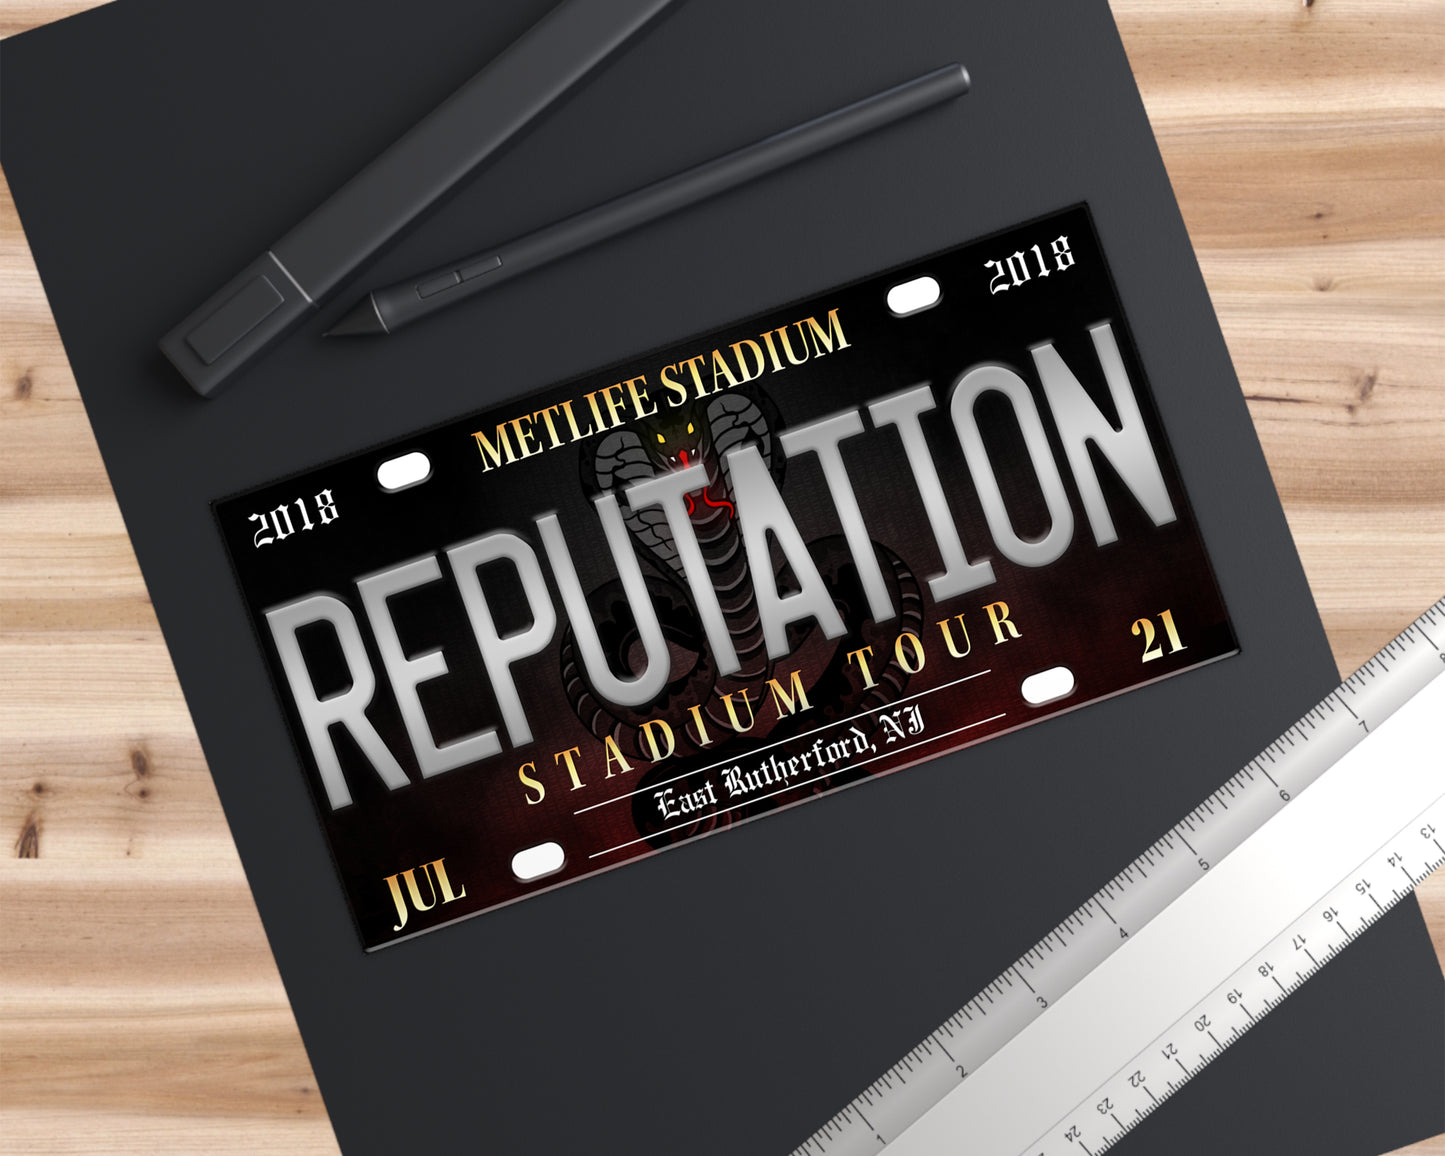 Reputation Stadium Tour bumper sticker